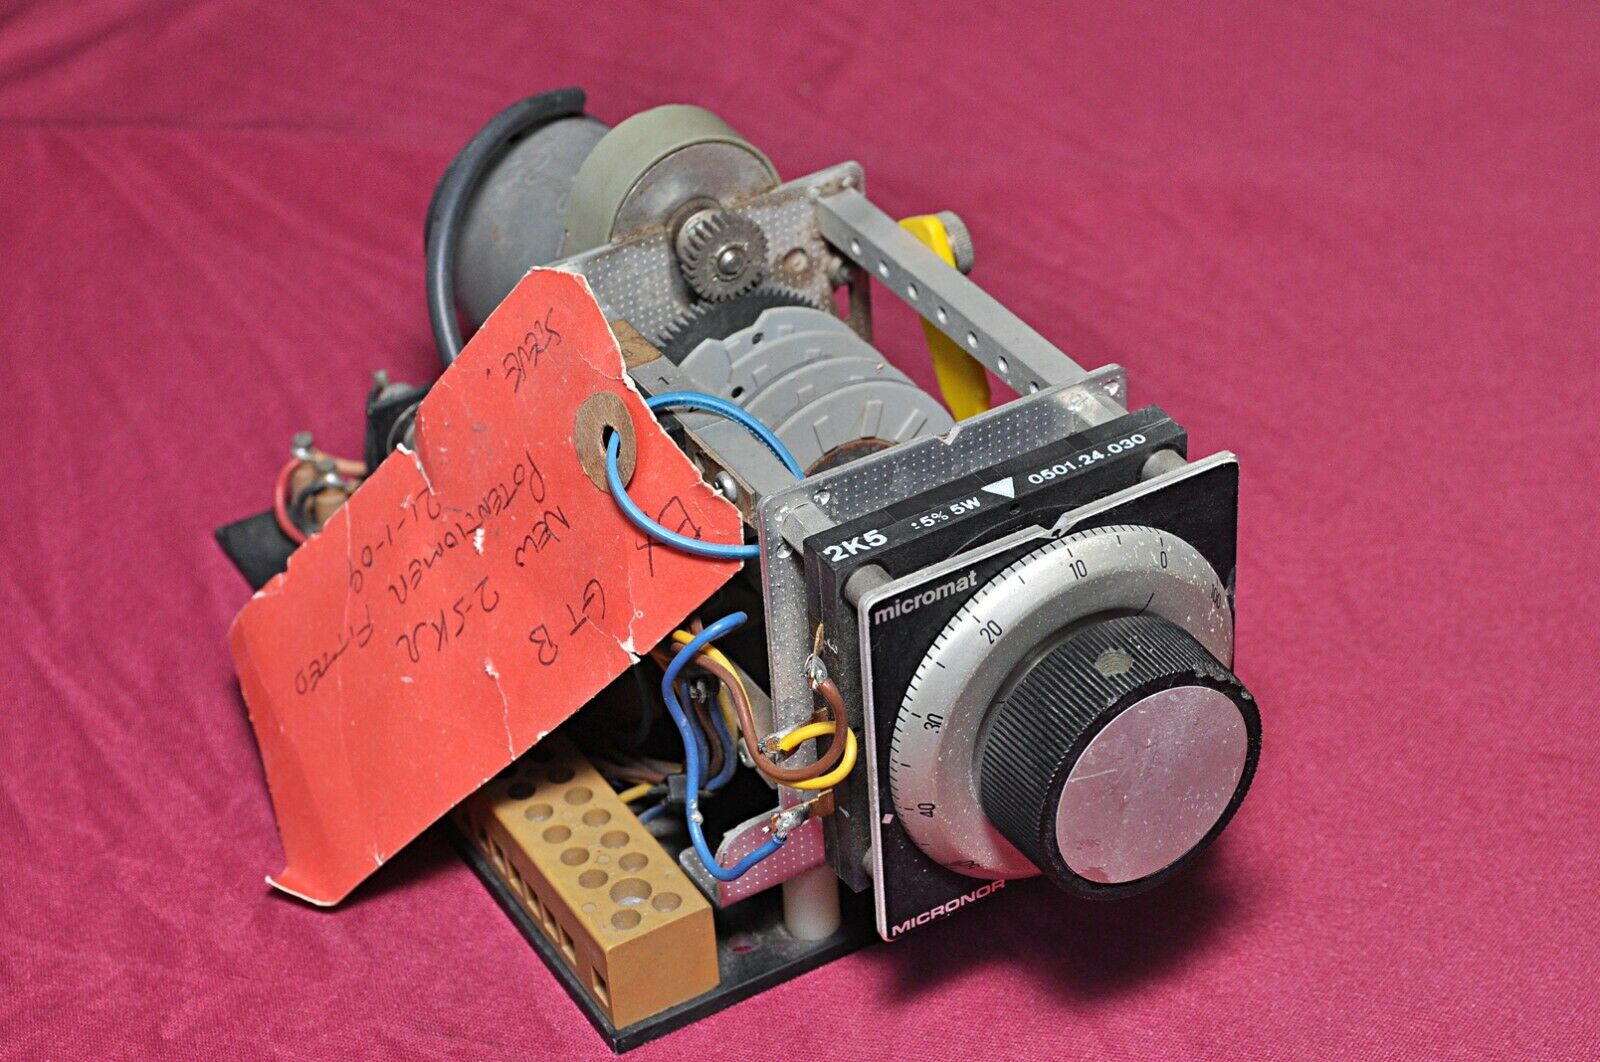 Micronor micromat turn motorized potentiometer